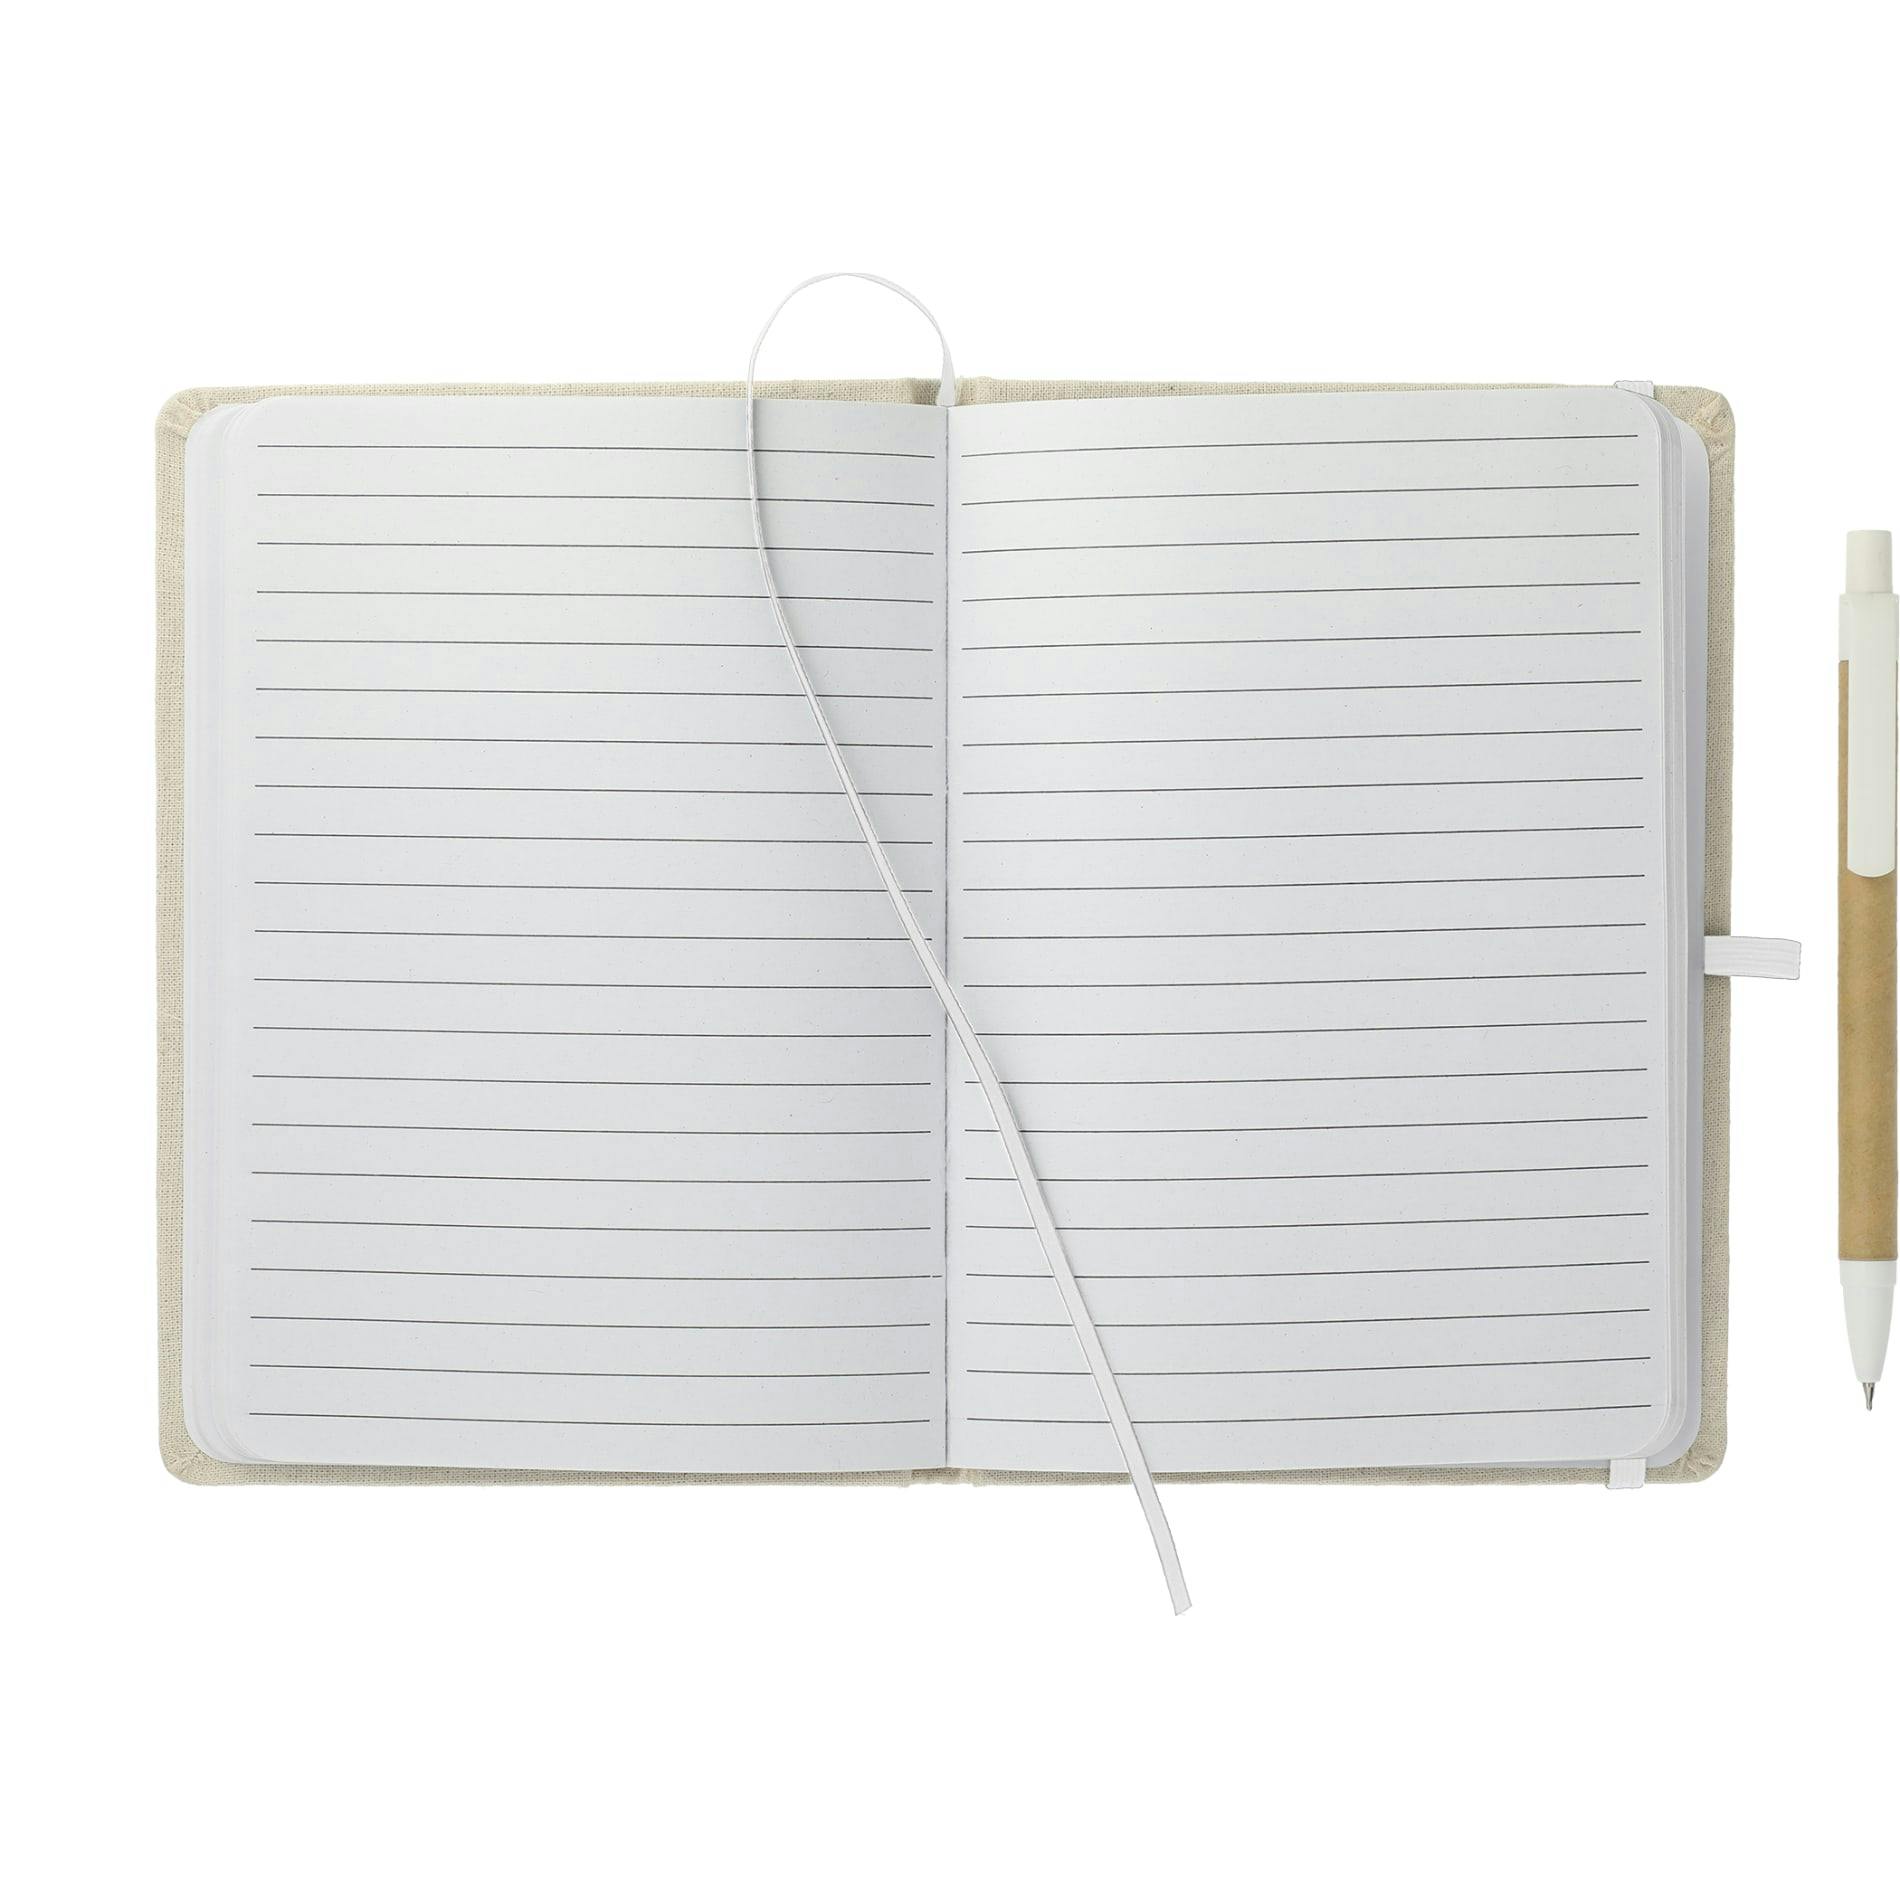 5" x 7" Organic Cotton Bound Notebook w/Pen - additional Image 4